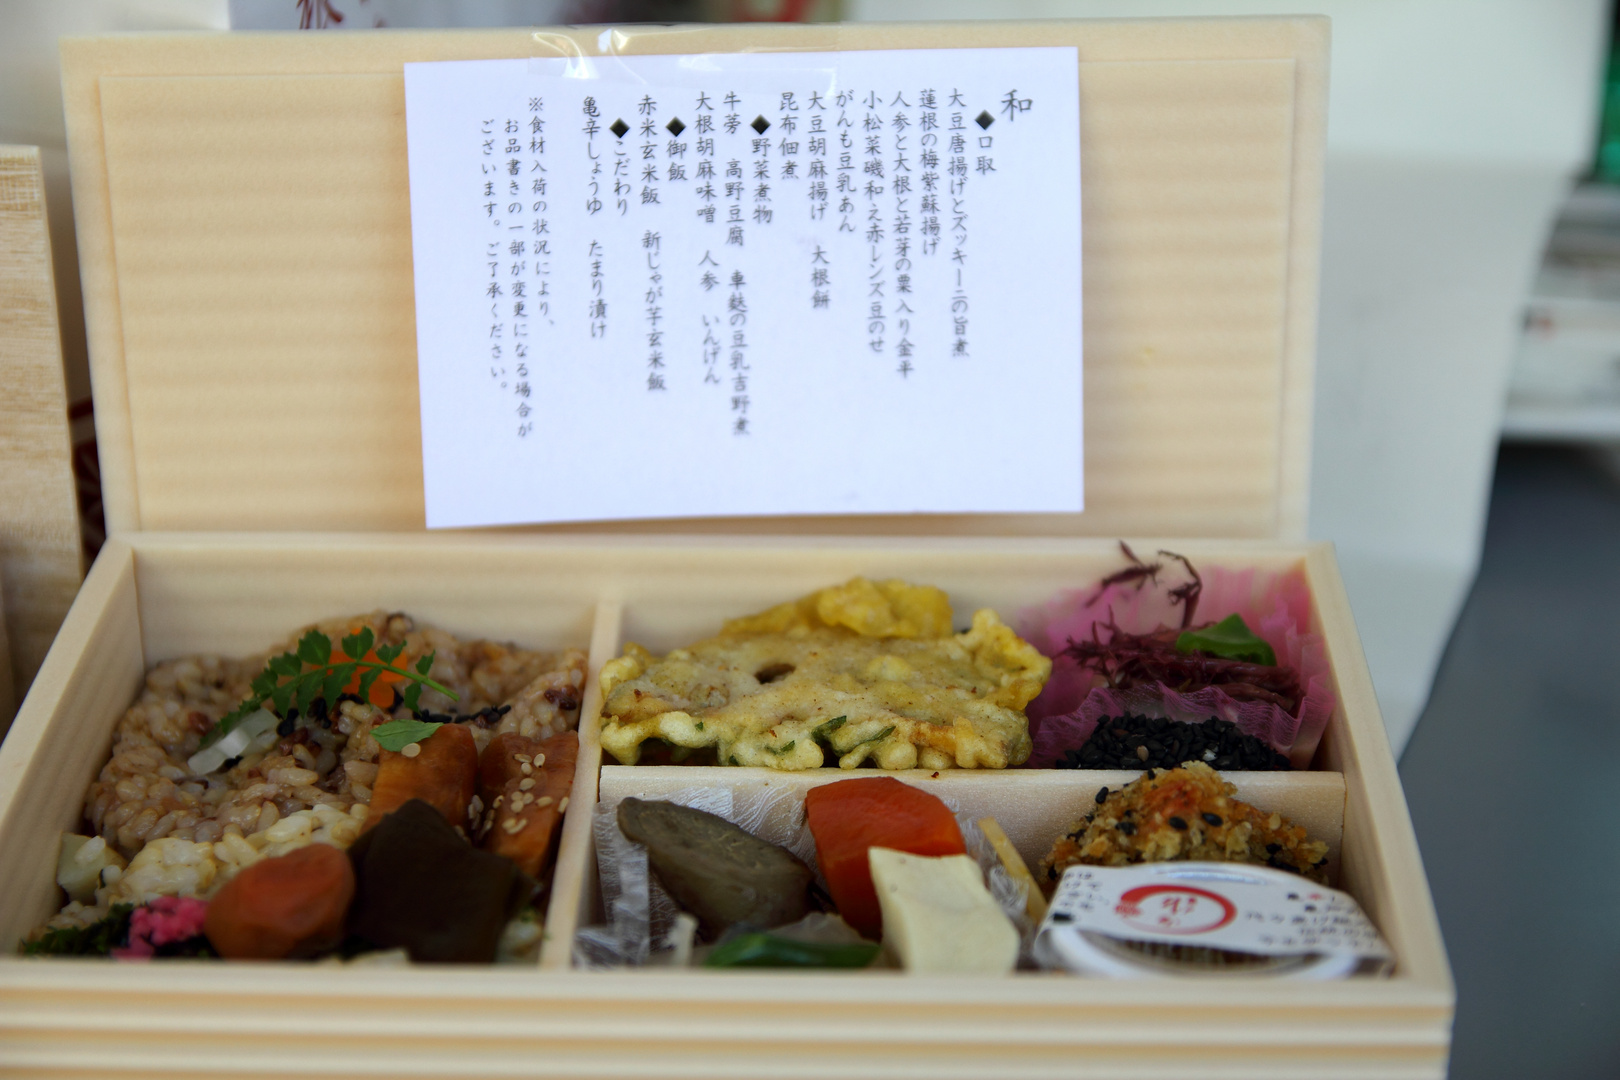 Japanese bento. (Lunch)